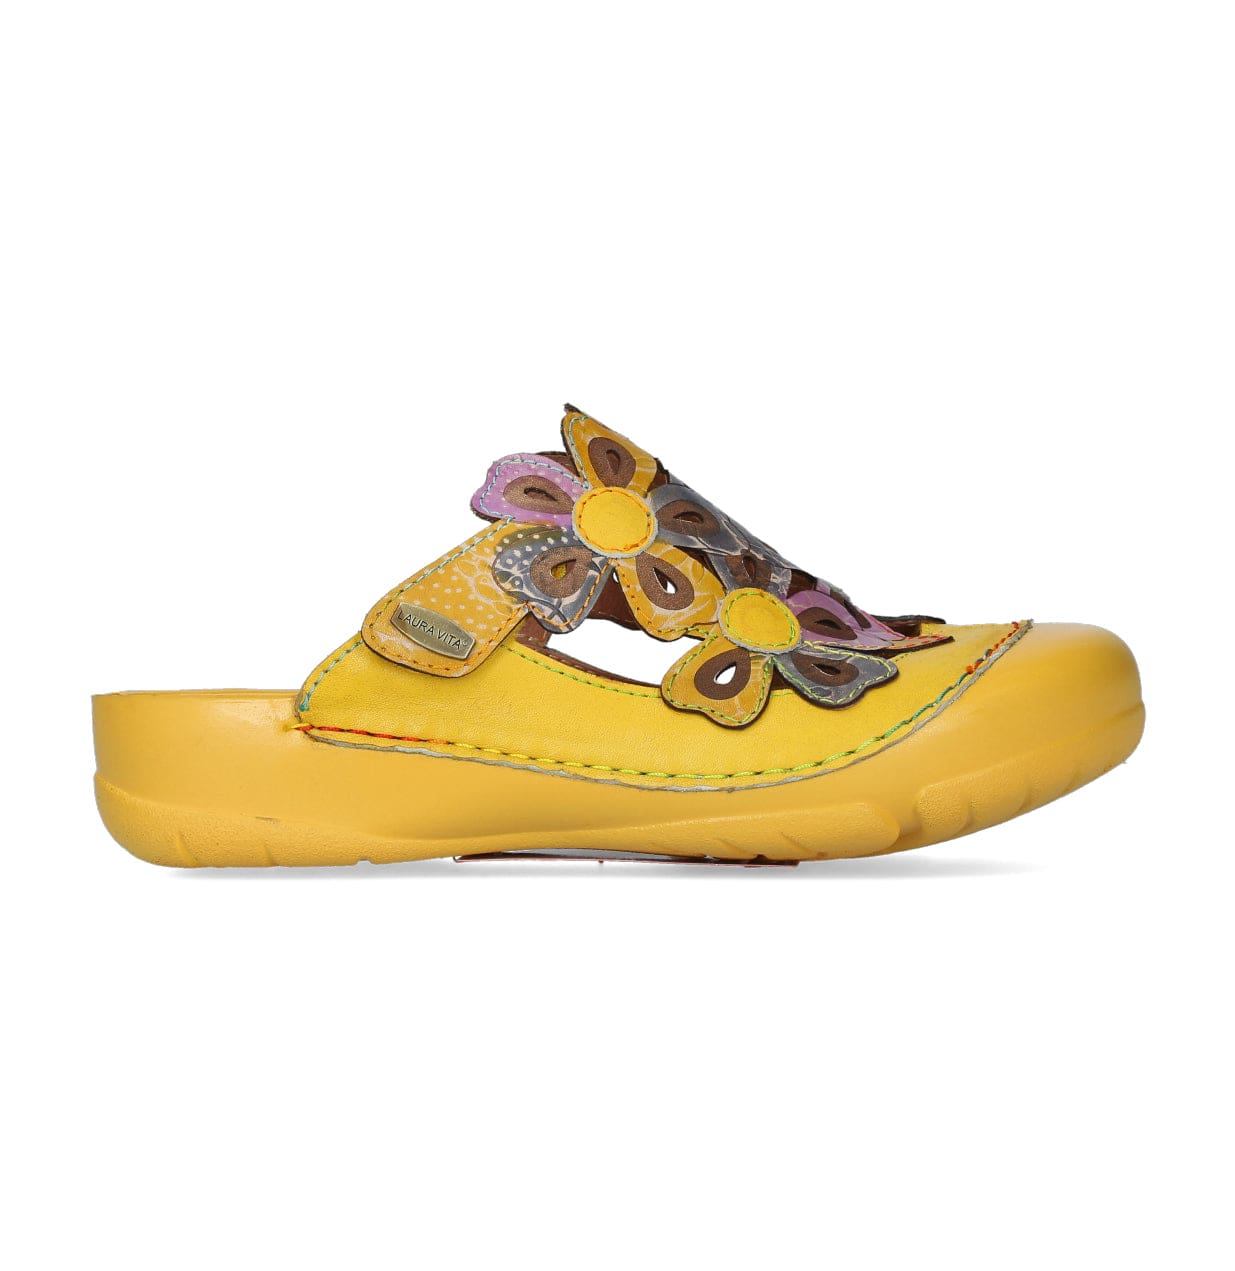 BECZIERSO 03 shoes - 35 / Yellow - Mule